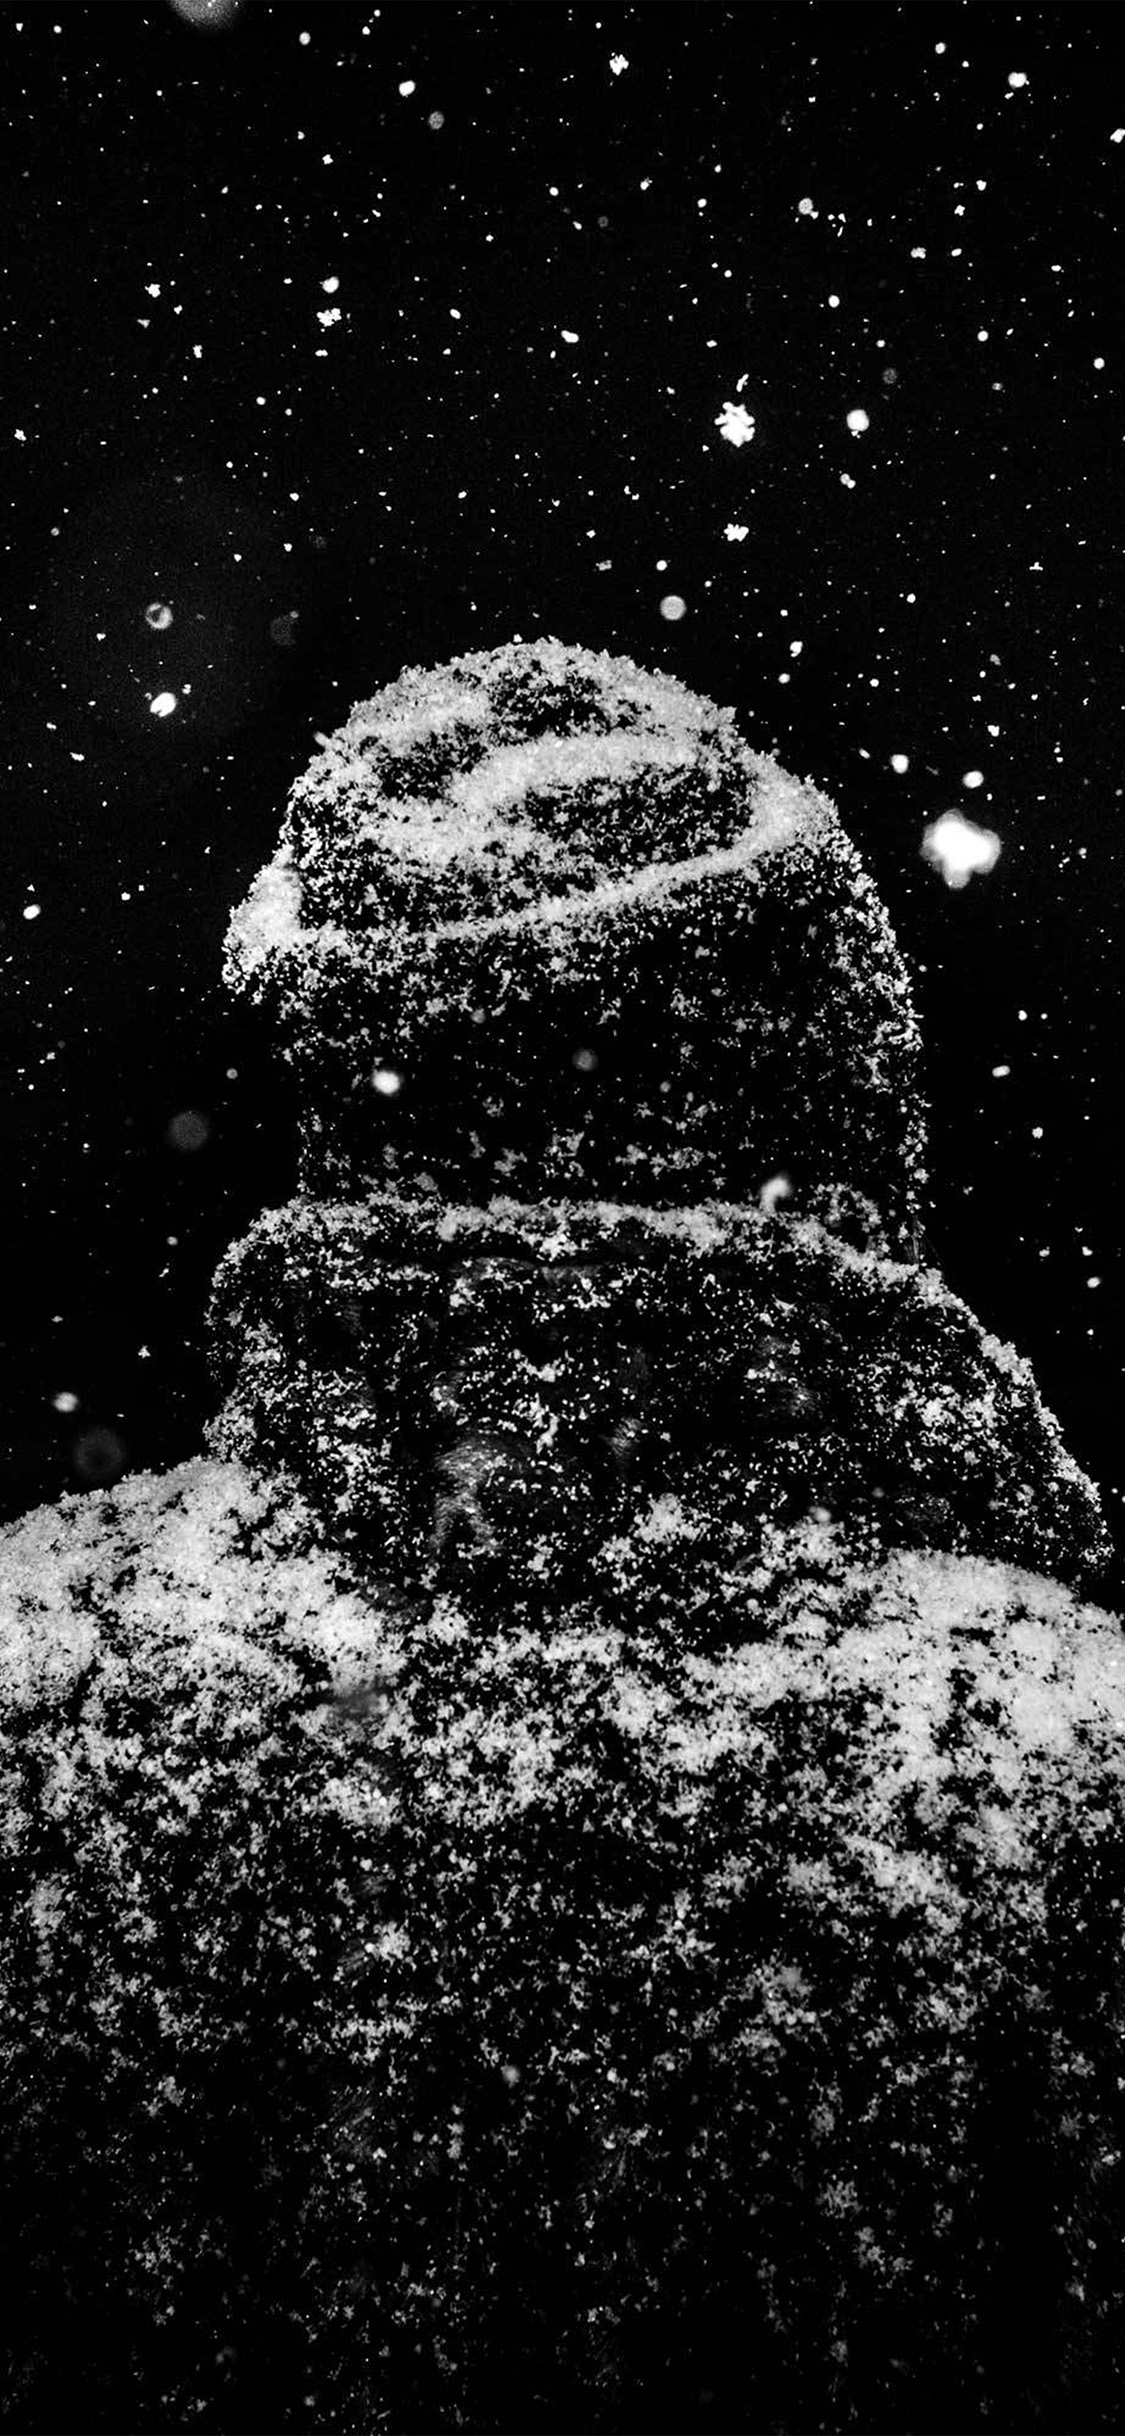 iPhone X wallpaper. snow winter dark man nature